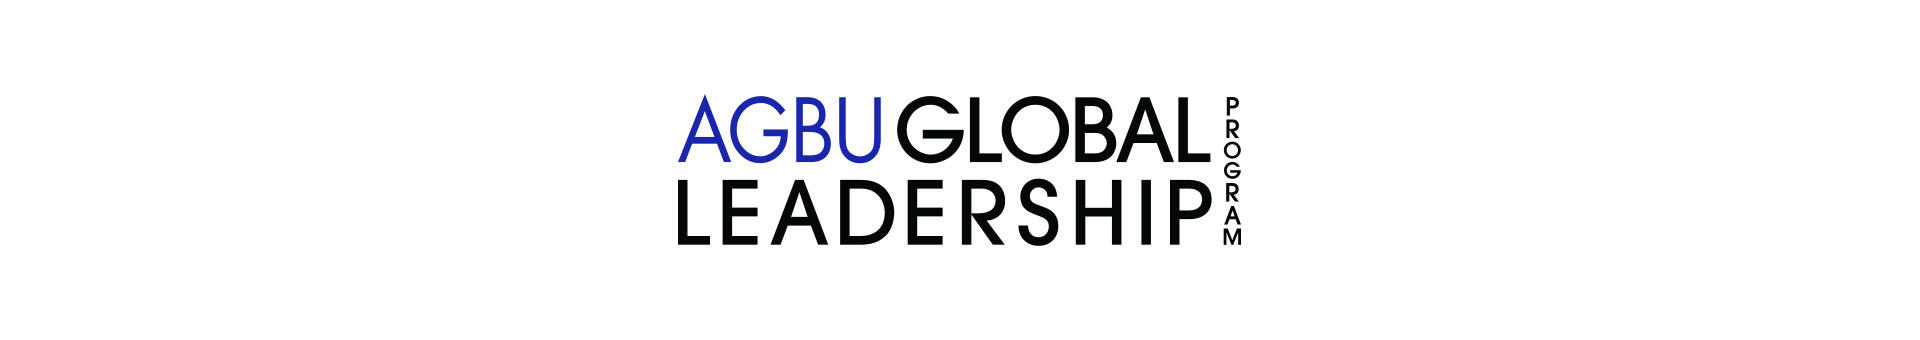 AGBU Global Leadership Program